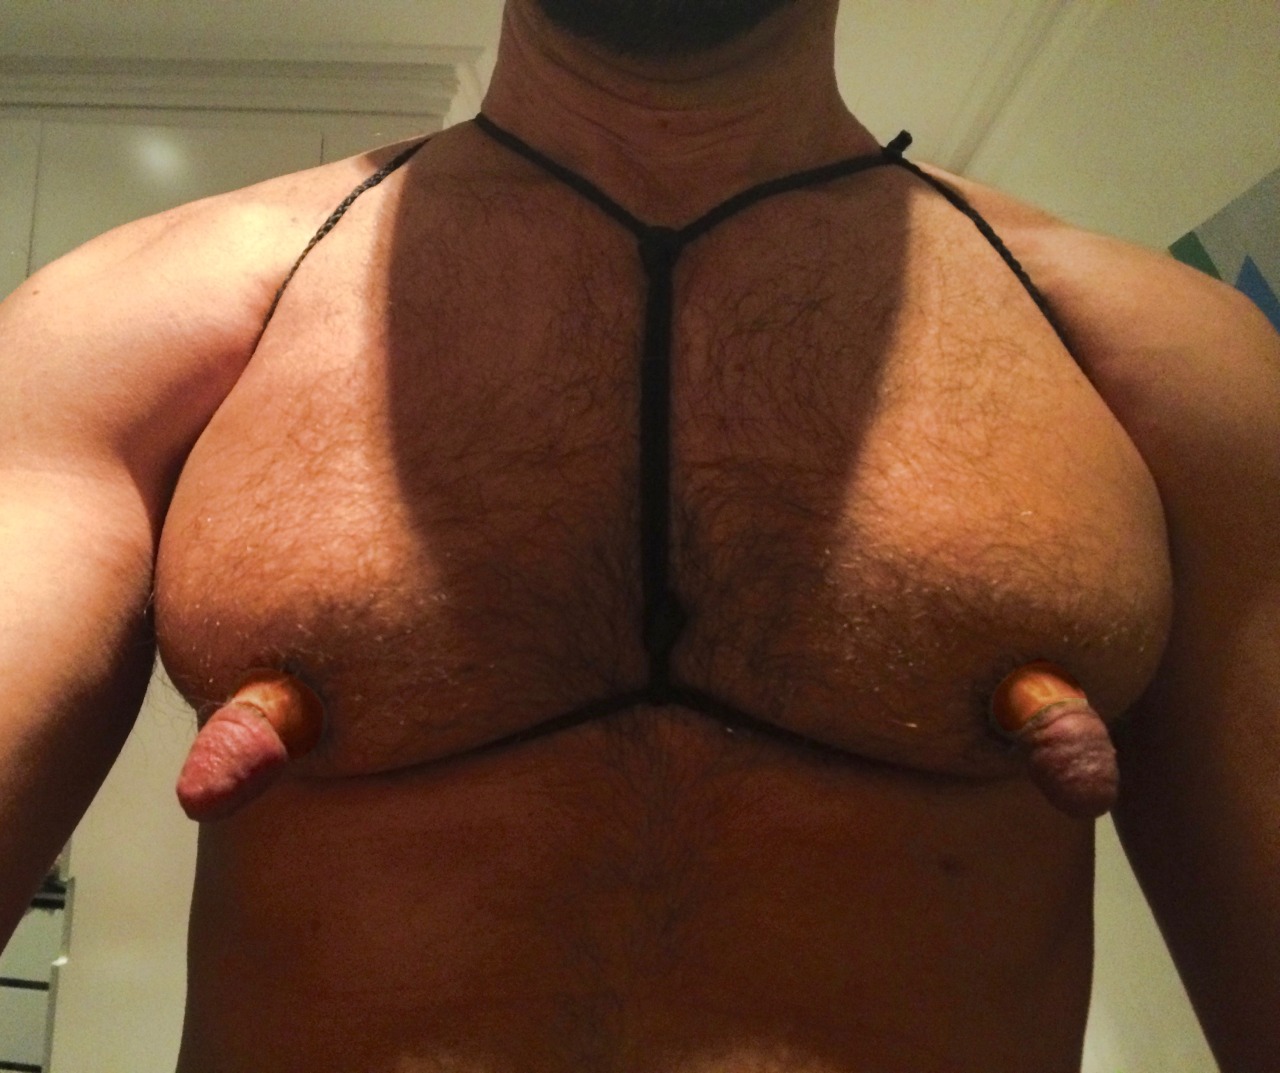 широкая грудь у мужчин фото 107